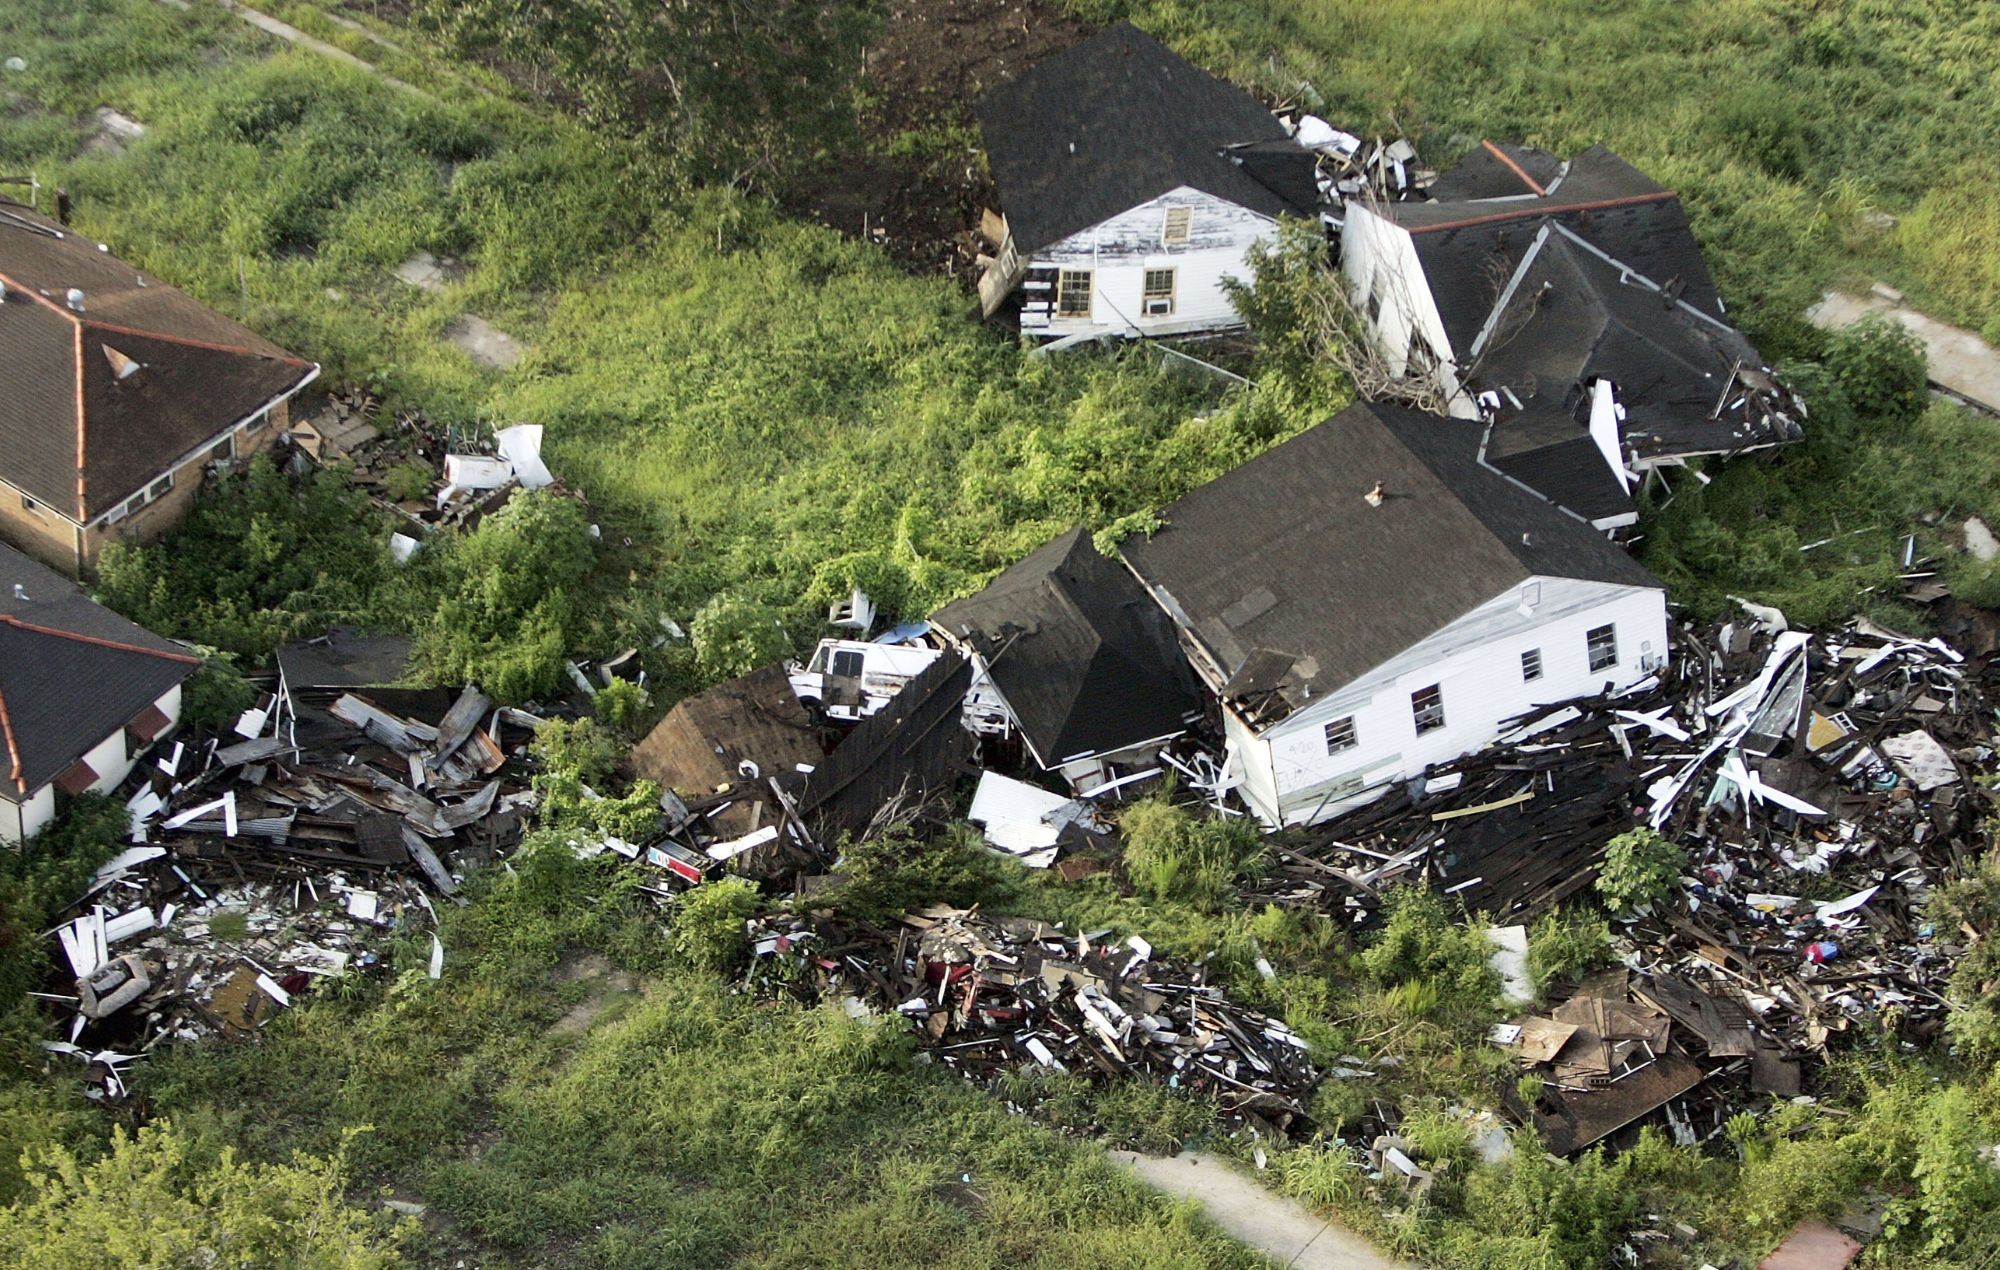 Destroyed houses after Hurricane Katrina